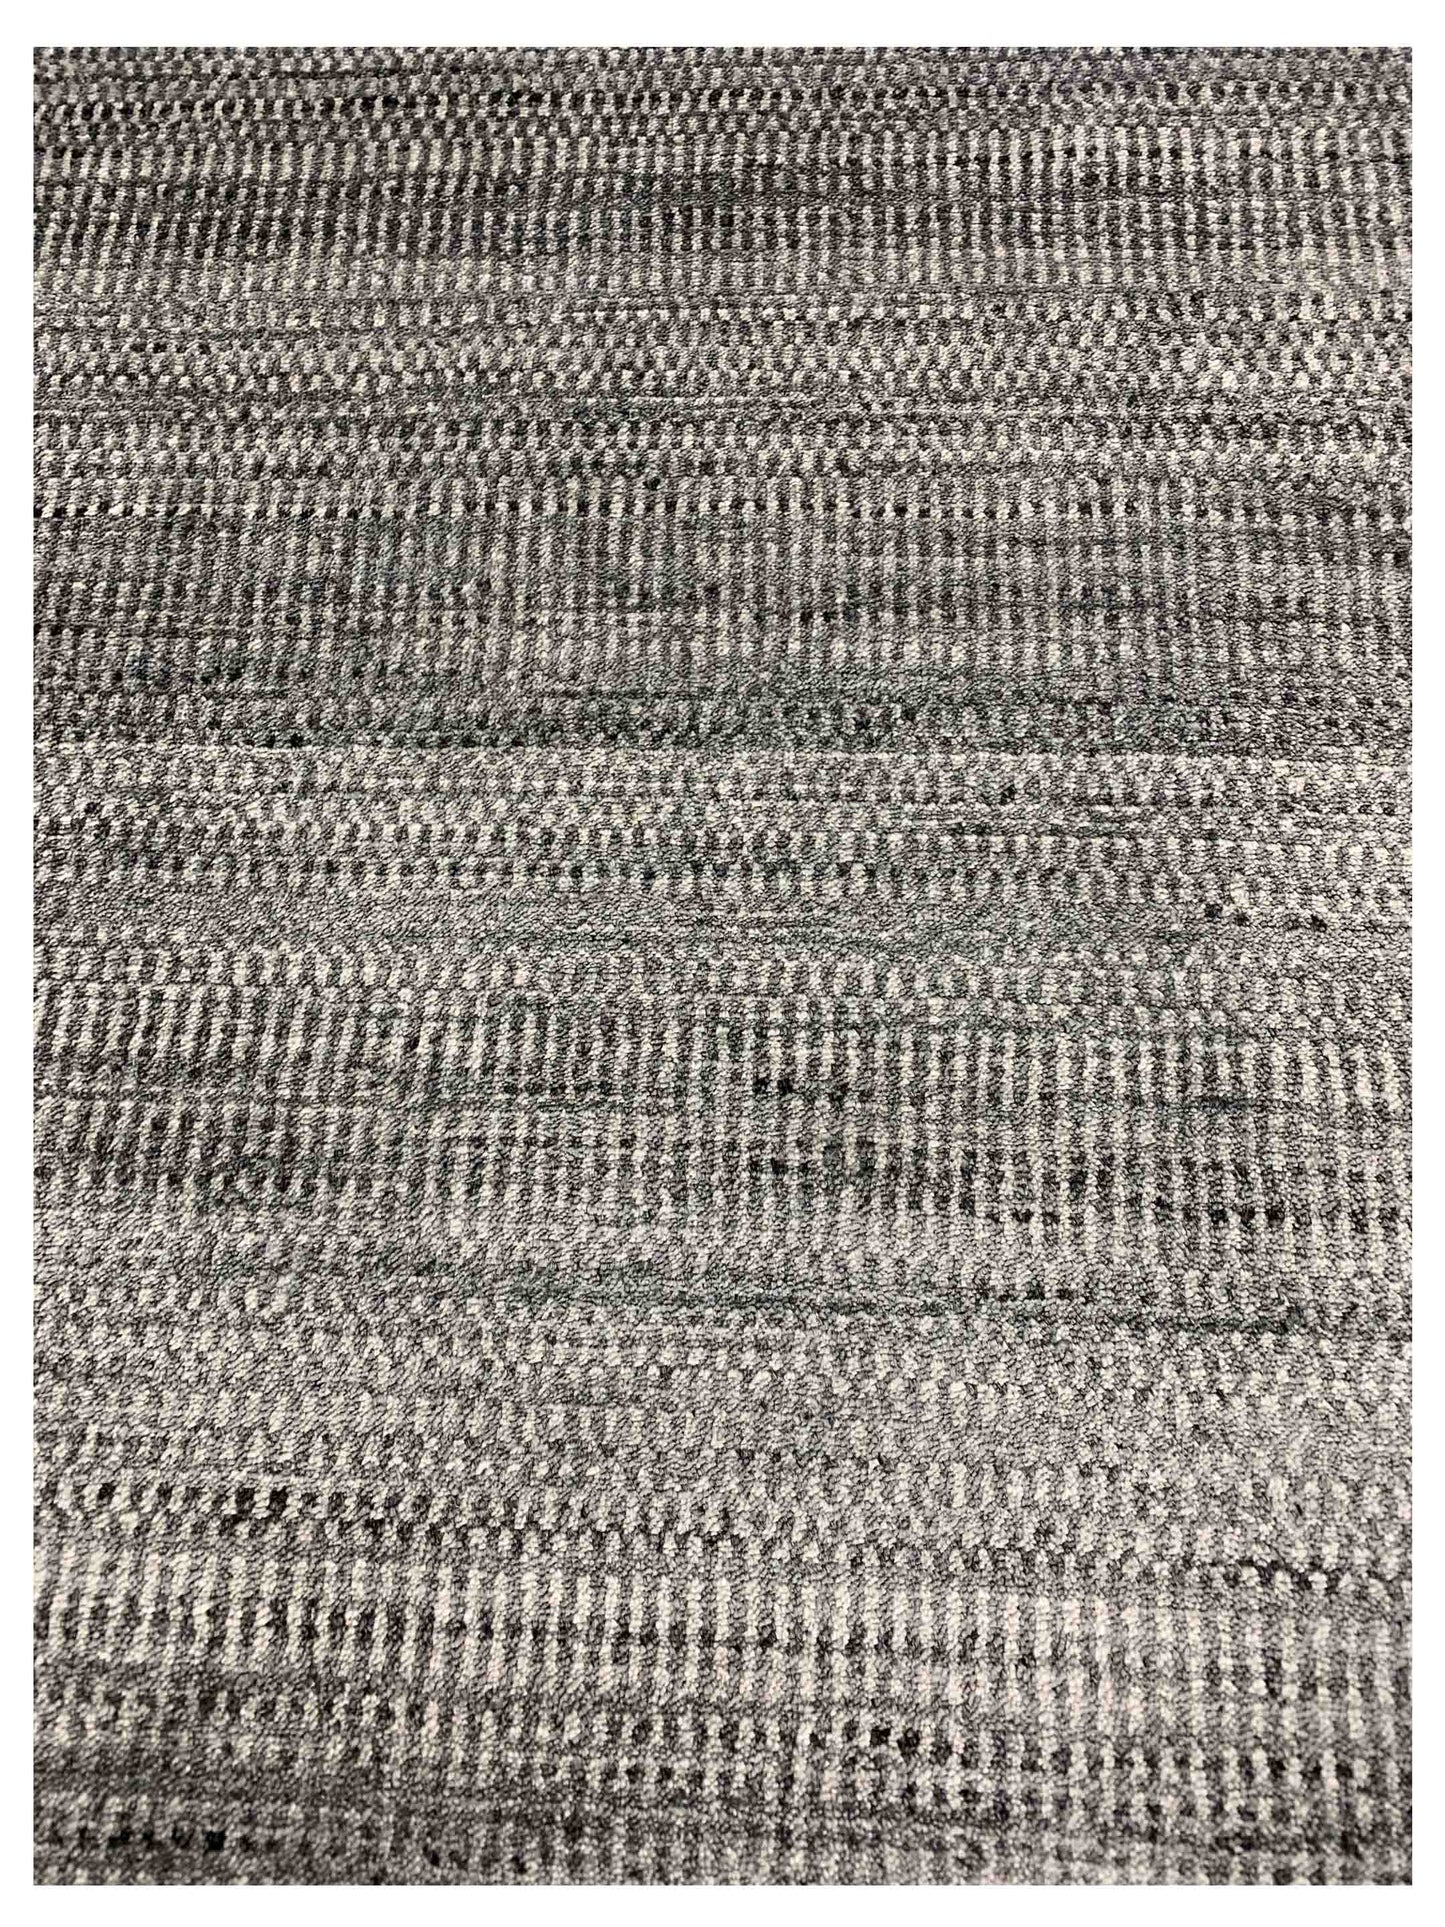 Artisan Heather  Black Silver Transitional Loom Rug